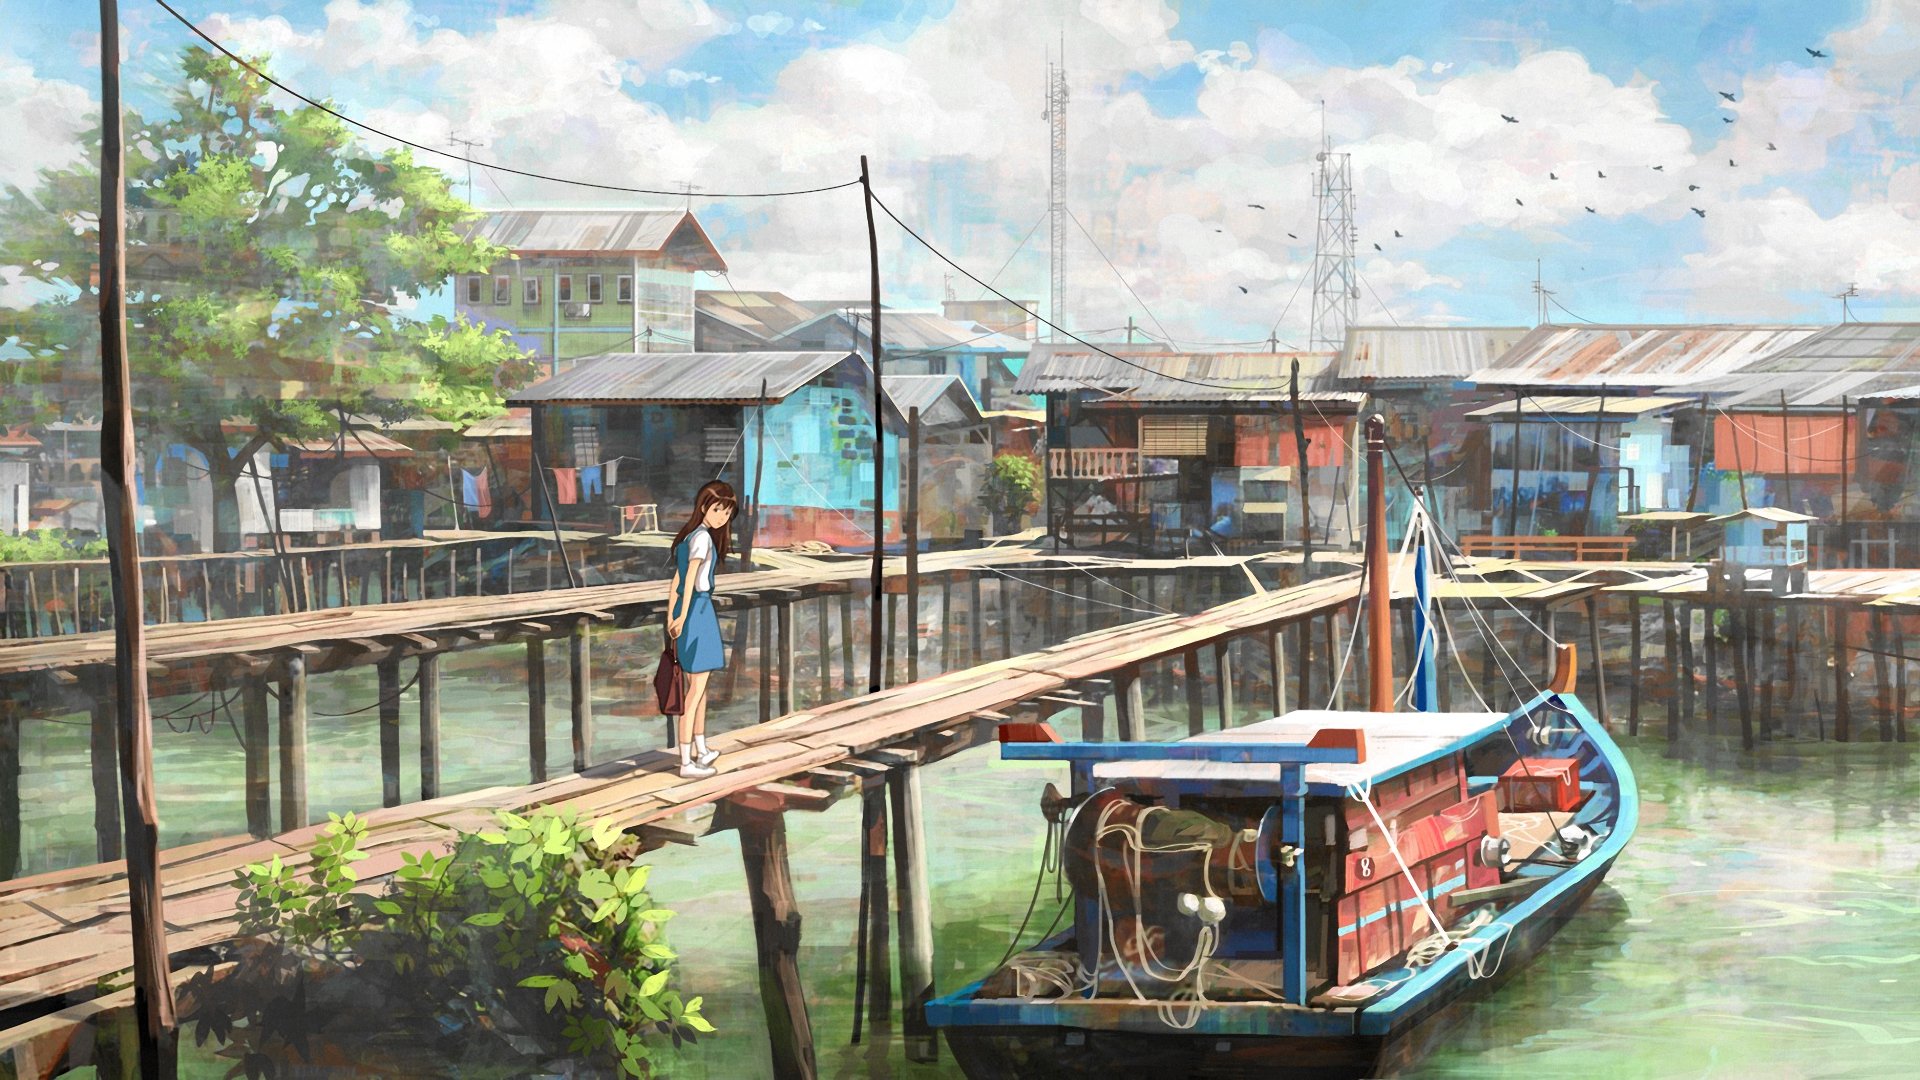 Anime Village Wallpaper